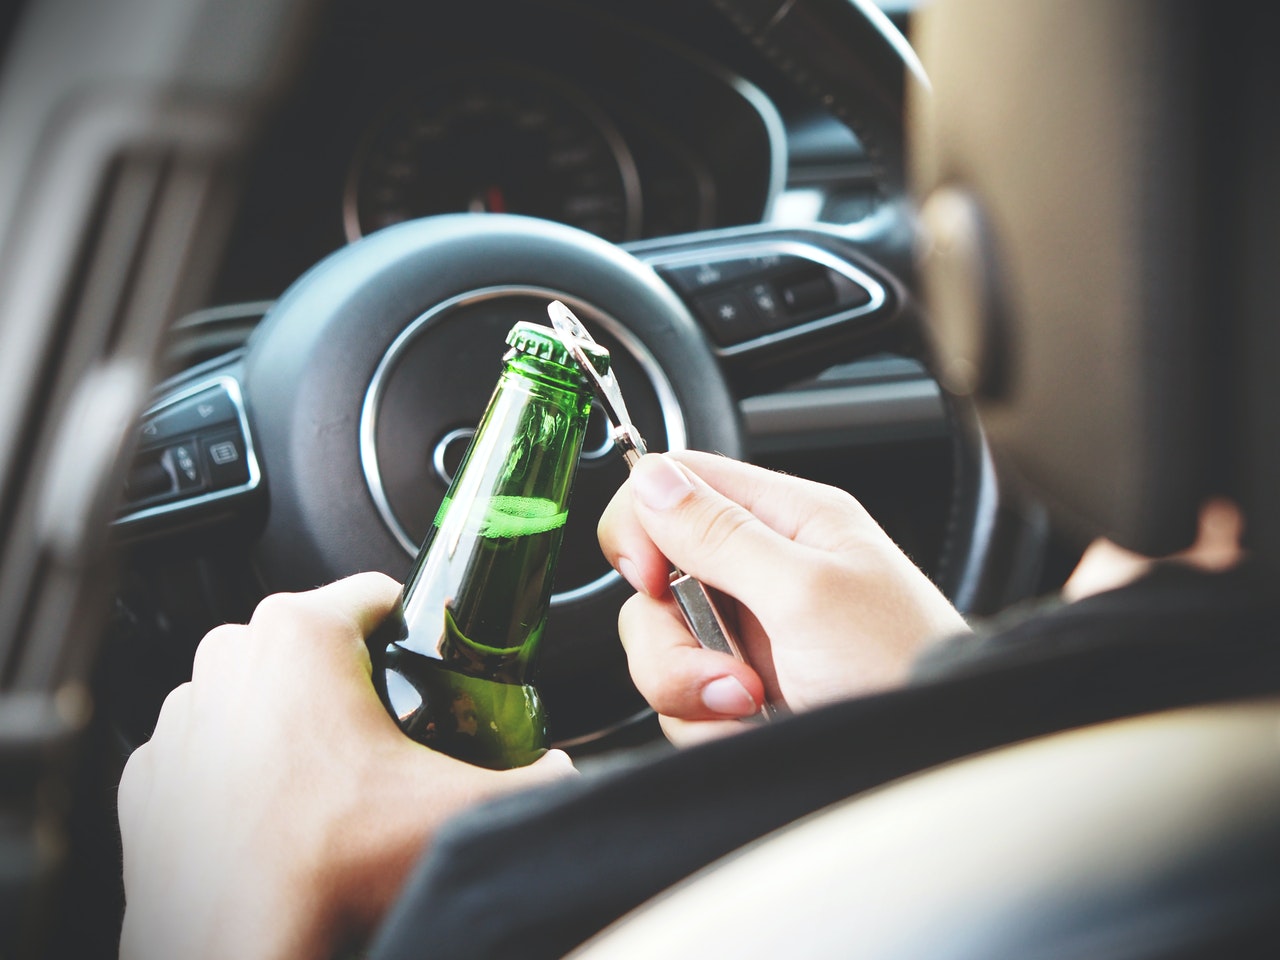 U Narti vozač napuhao 2 promila, a bilo je još alkoholiziranih